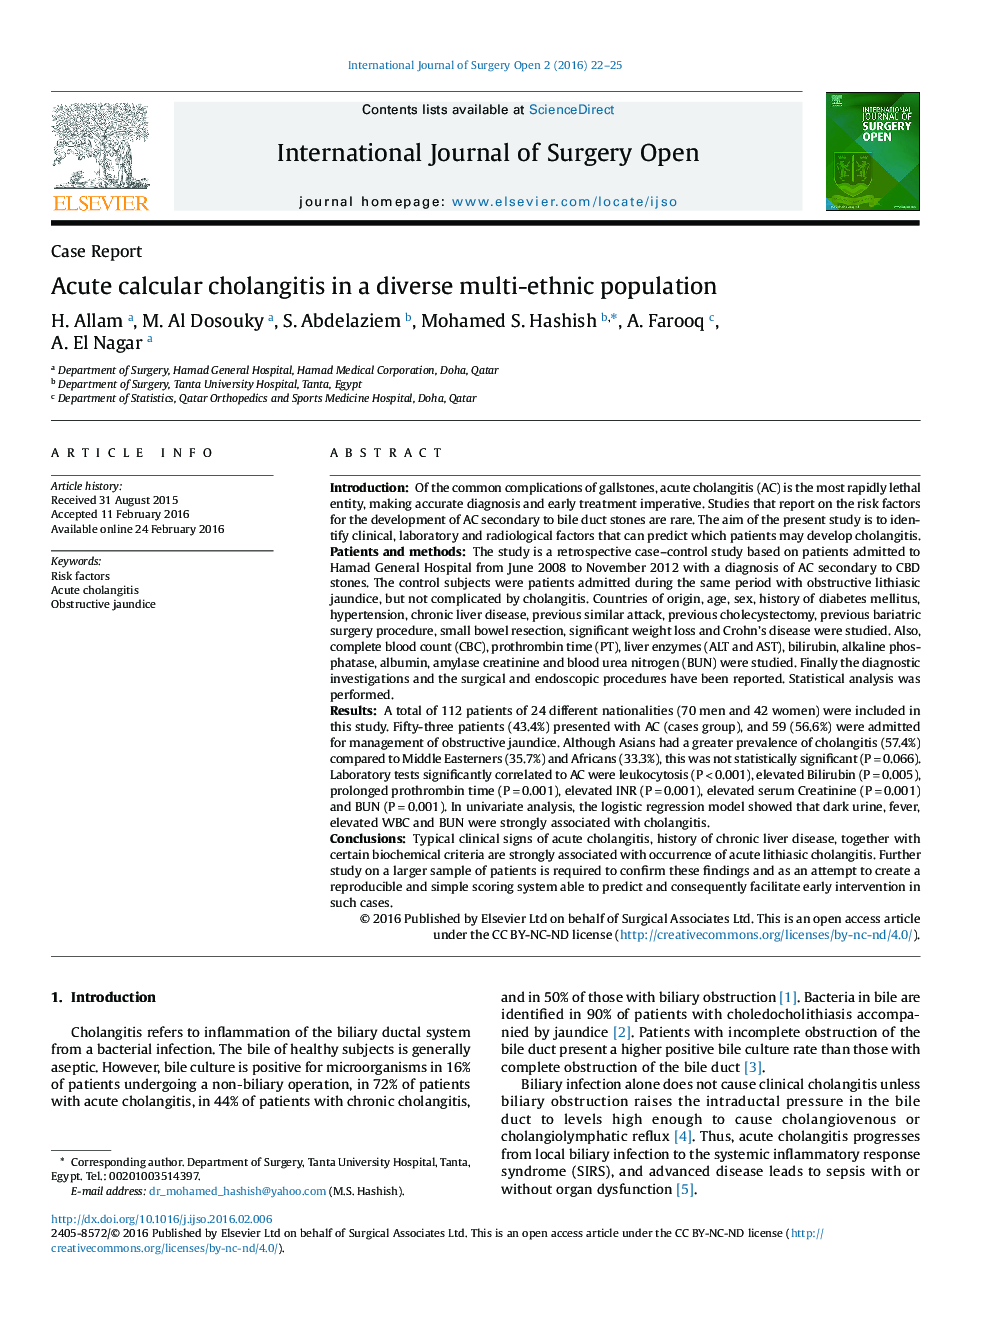 Acute calcular cholangitis in a diverse multi-ethnic population